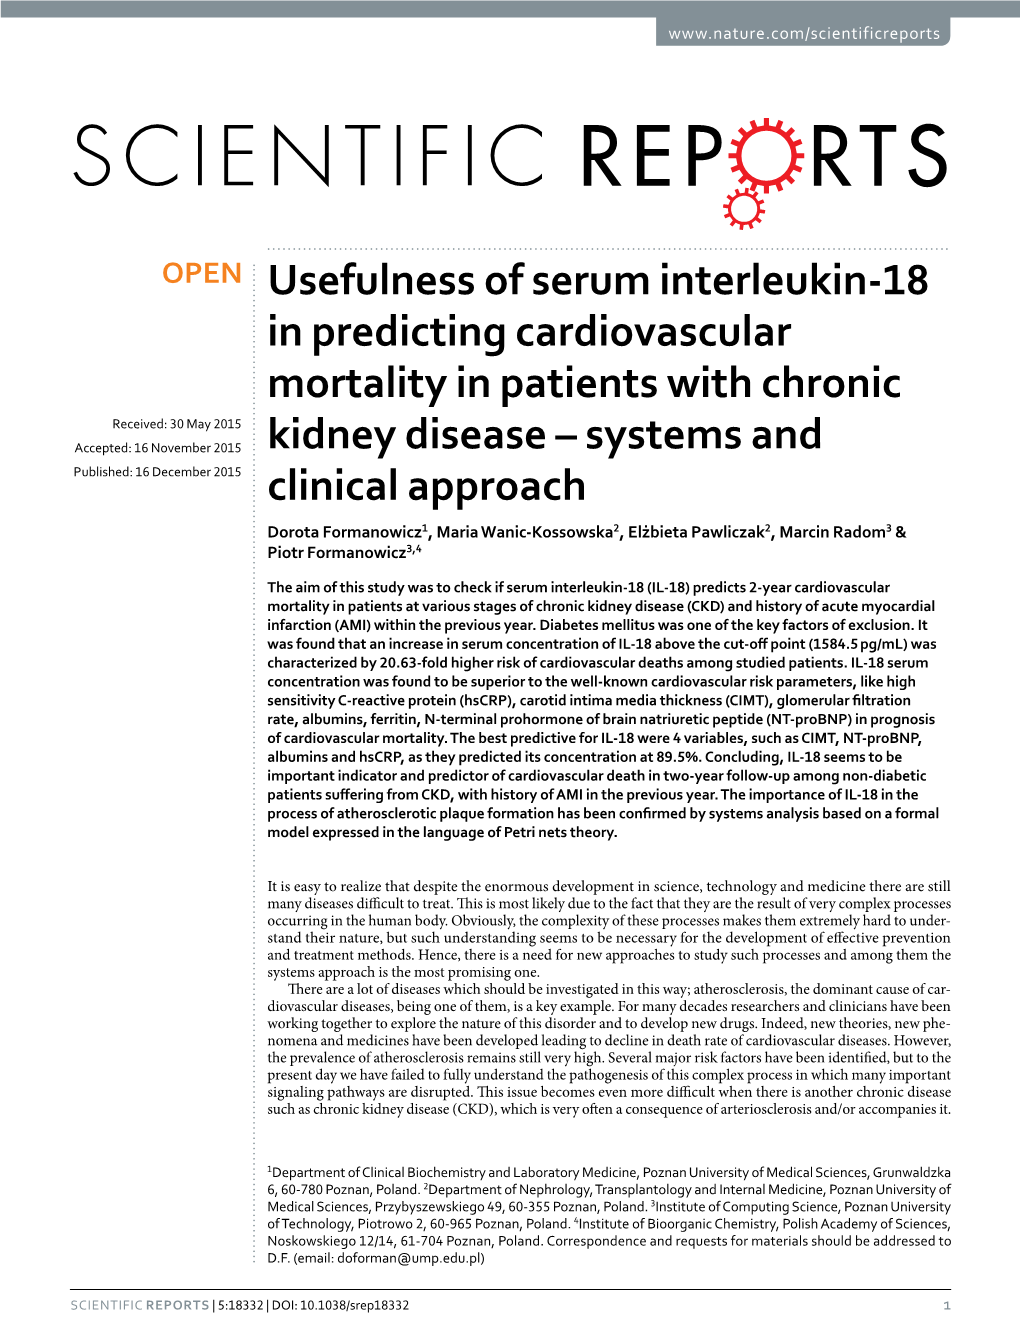 Usefulness of Serum Interleukin-18 in Predicting Cardiovascular Mortality